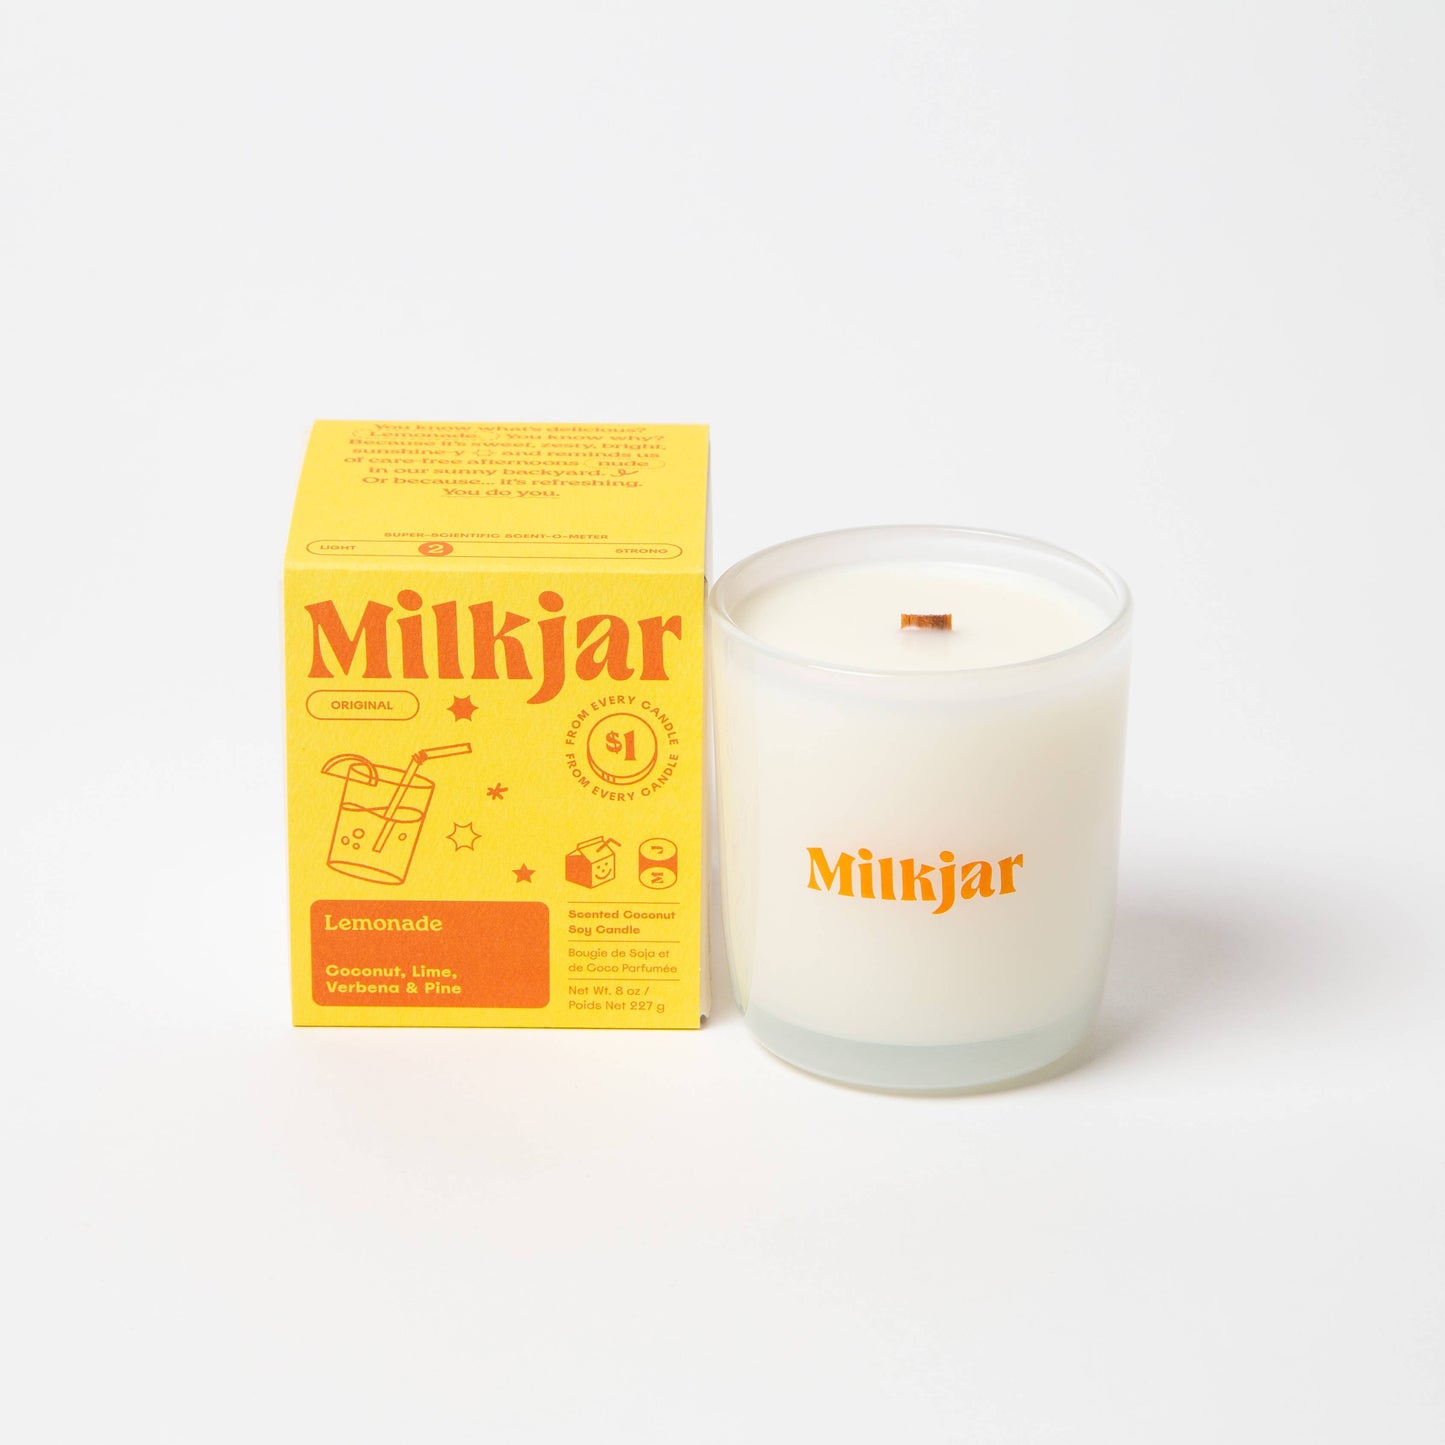 Milk Jar Lemonade 8 oz Candle